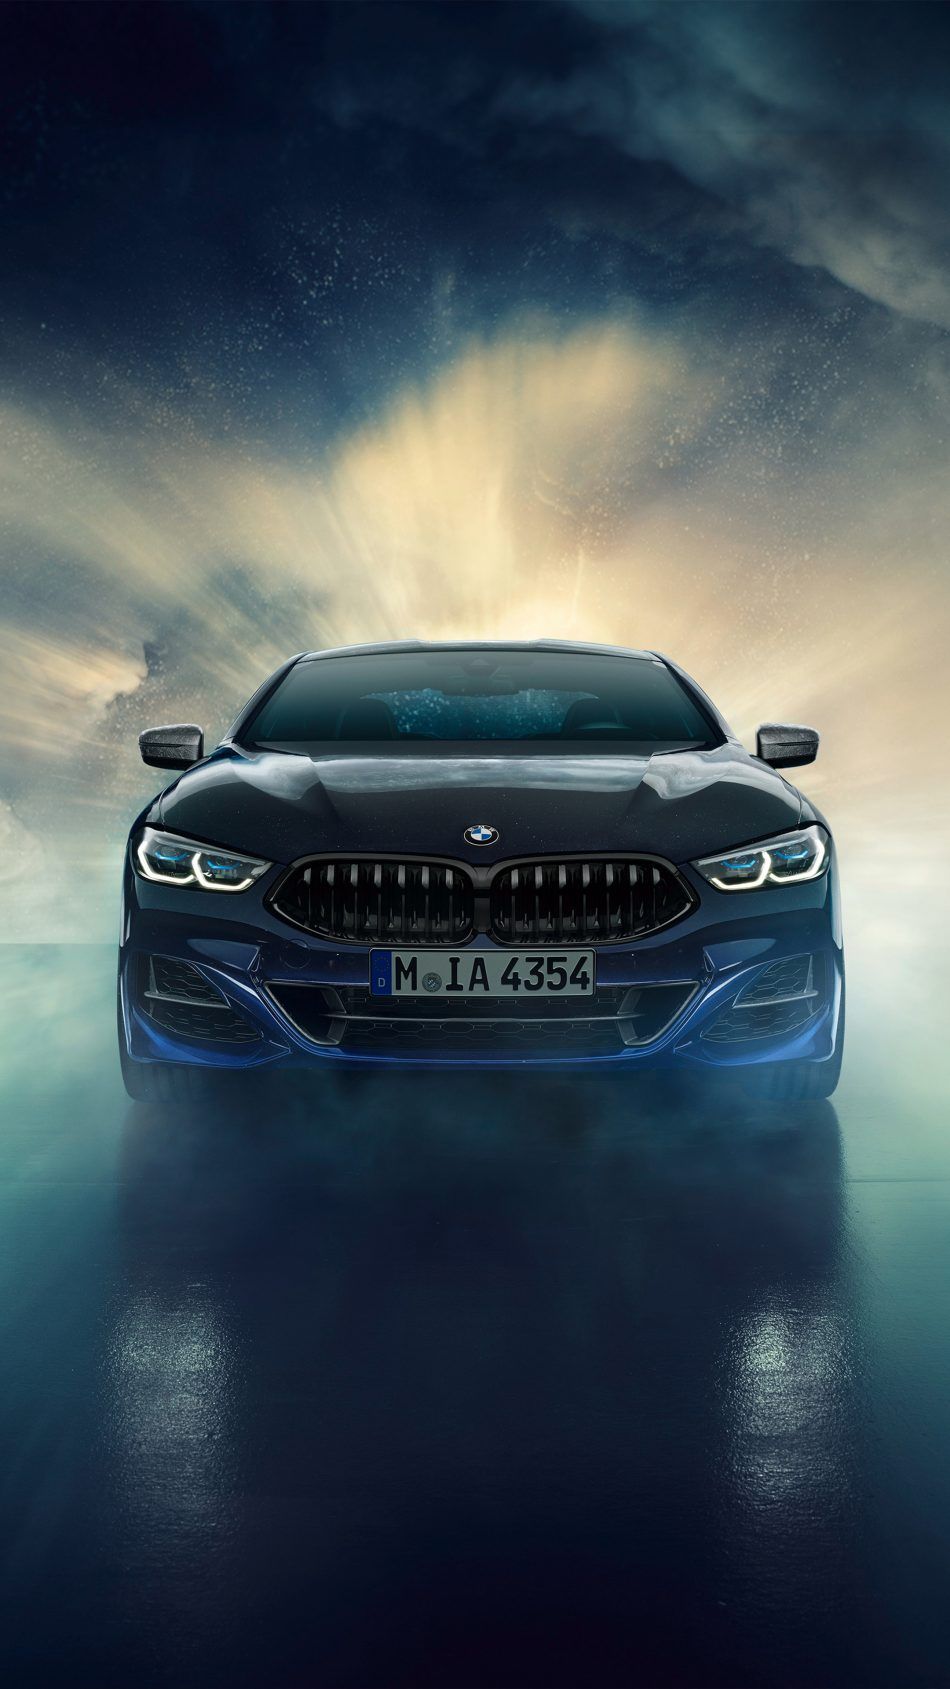 BMW Individual M850i Xdrive Night Sky 4K Ultra HD Mobile Wallpaper. Bmw, Bmw wallpaper, Bmw cars